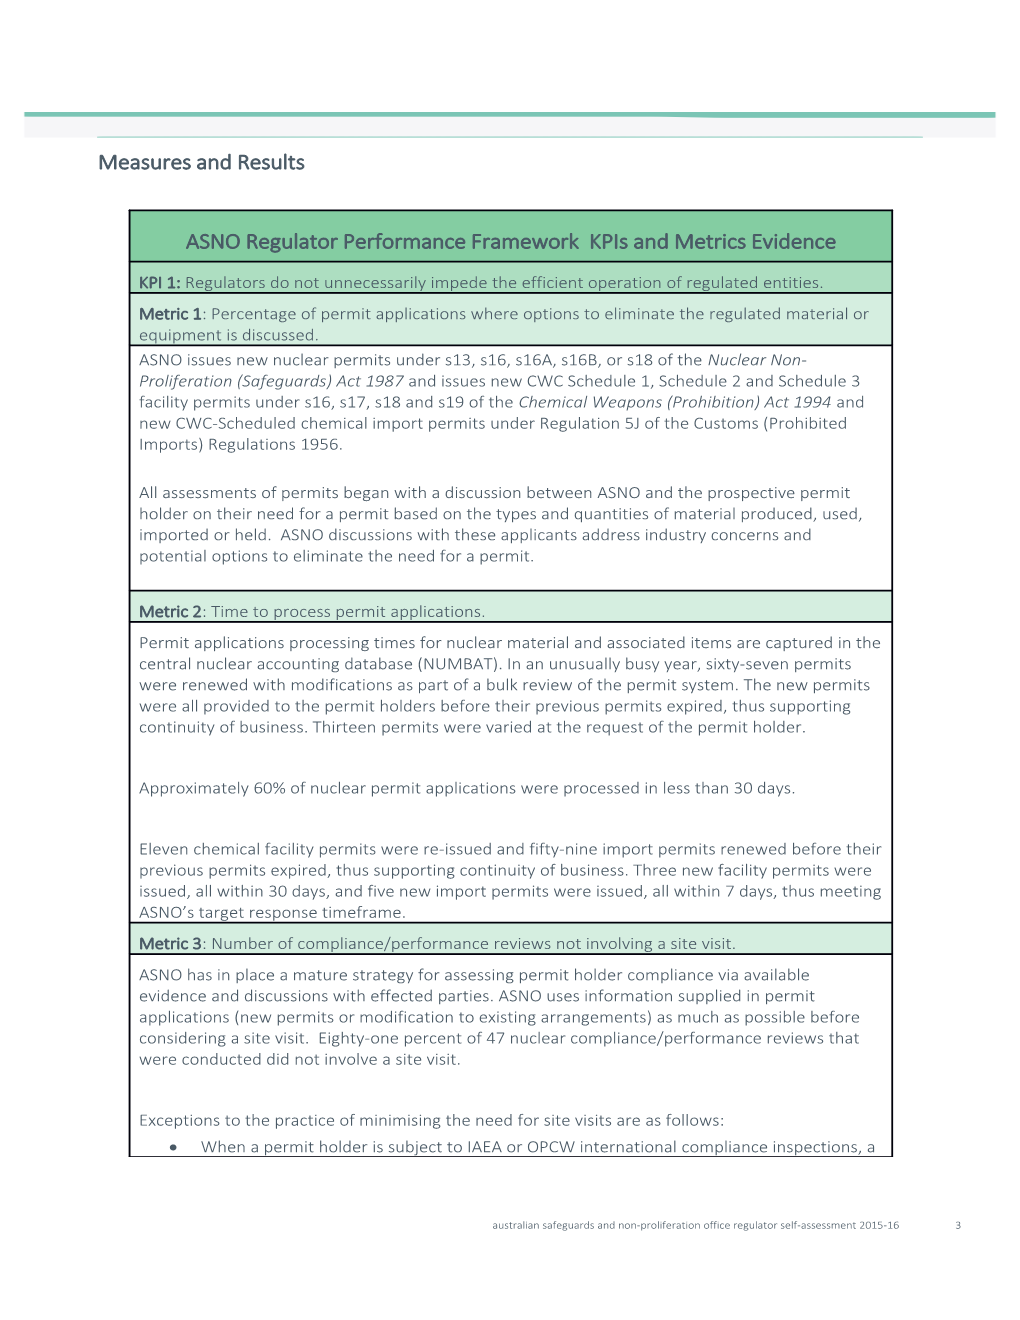 Australian Safeguards and Non-Proliferation Office Regulator Self-Assessment 2015-16